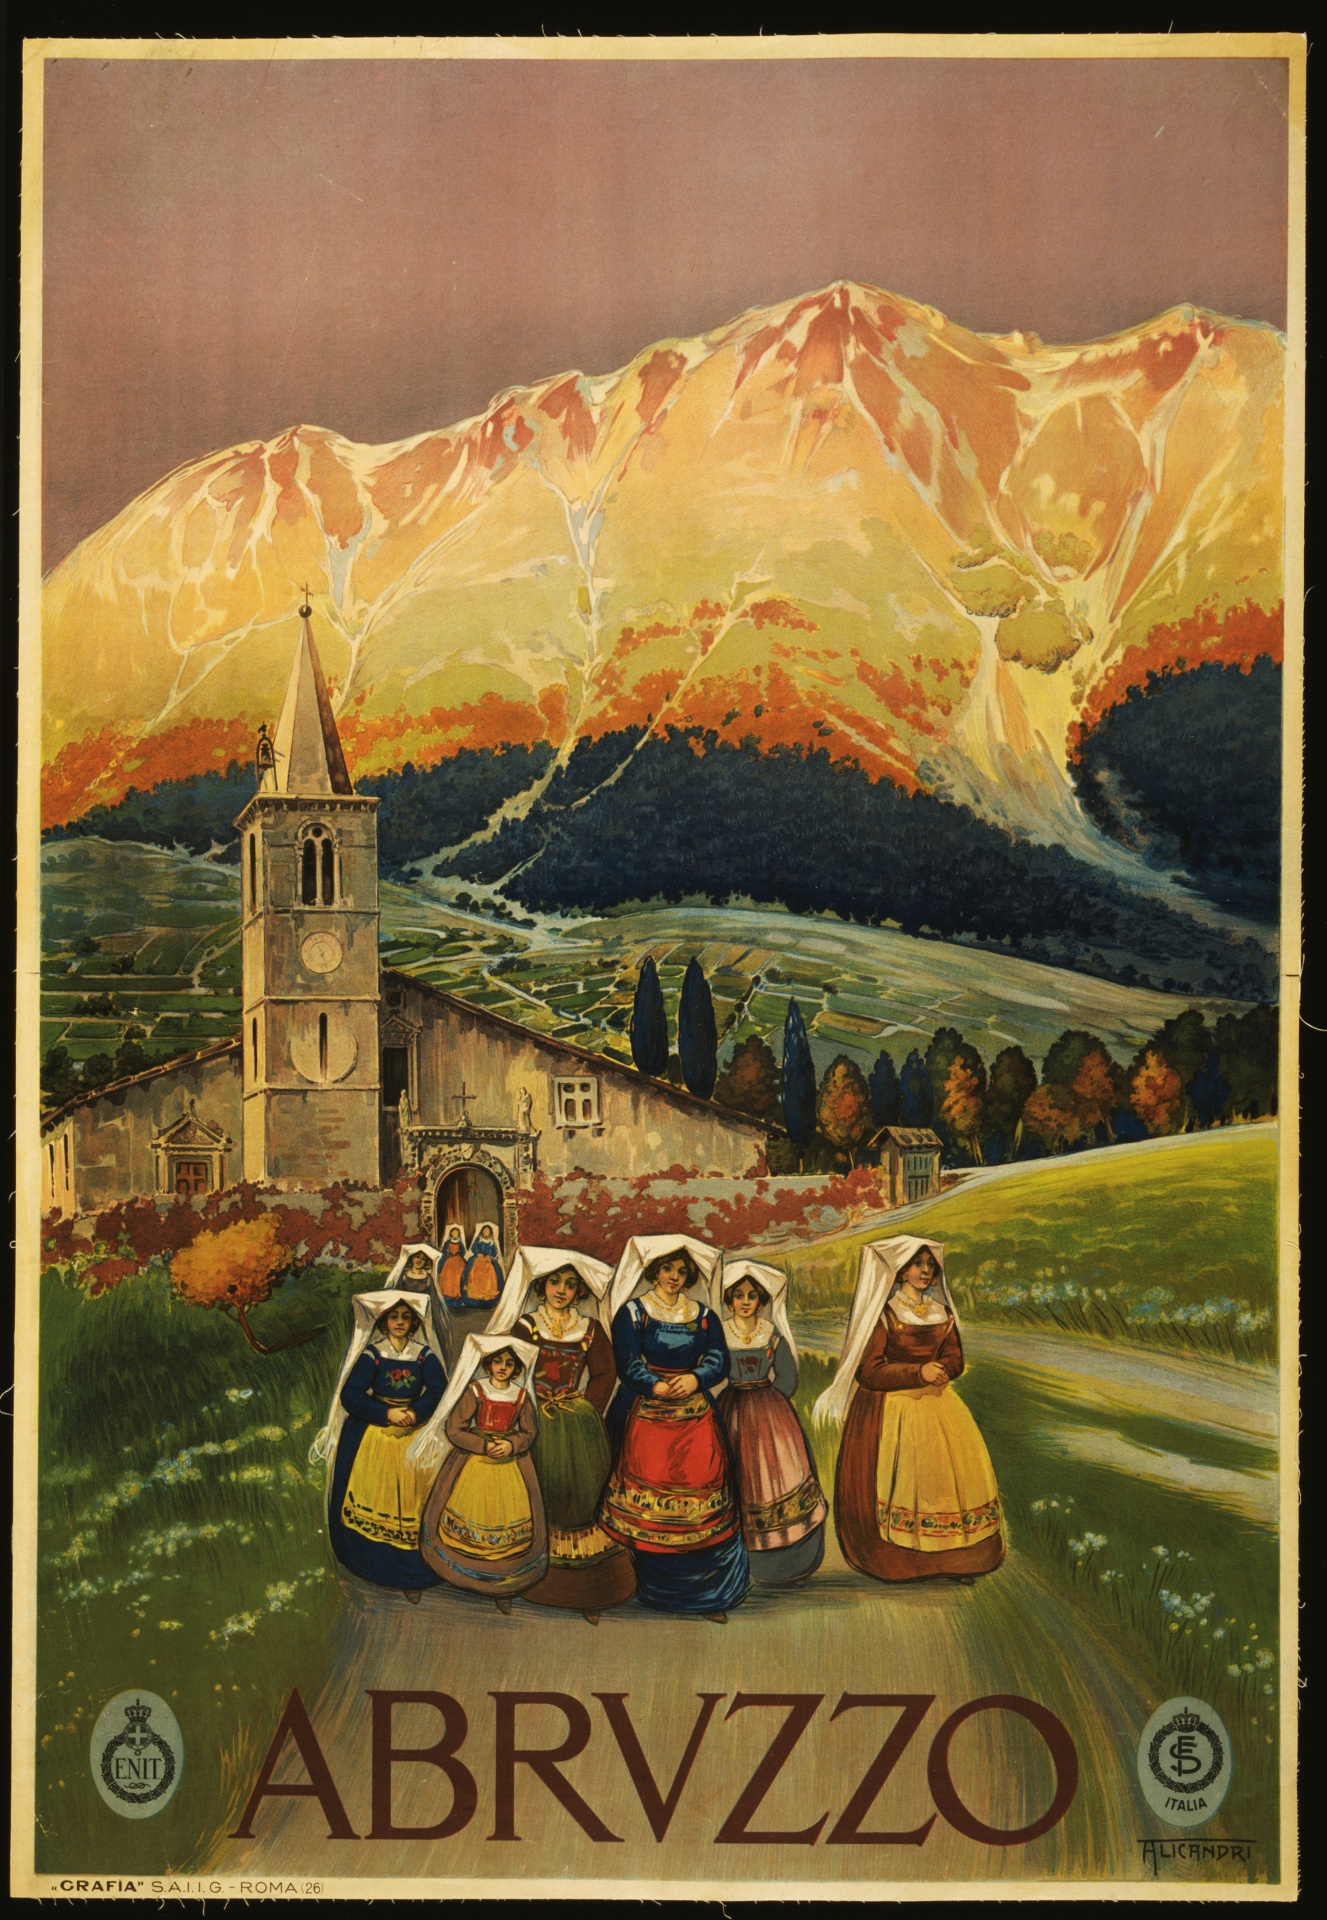 Abrvzzo, cartel del viaje de Italia